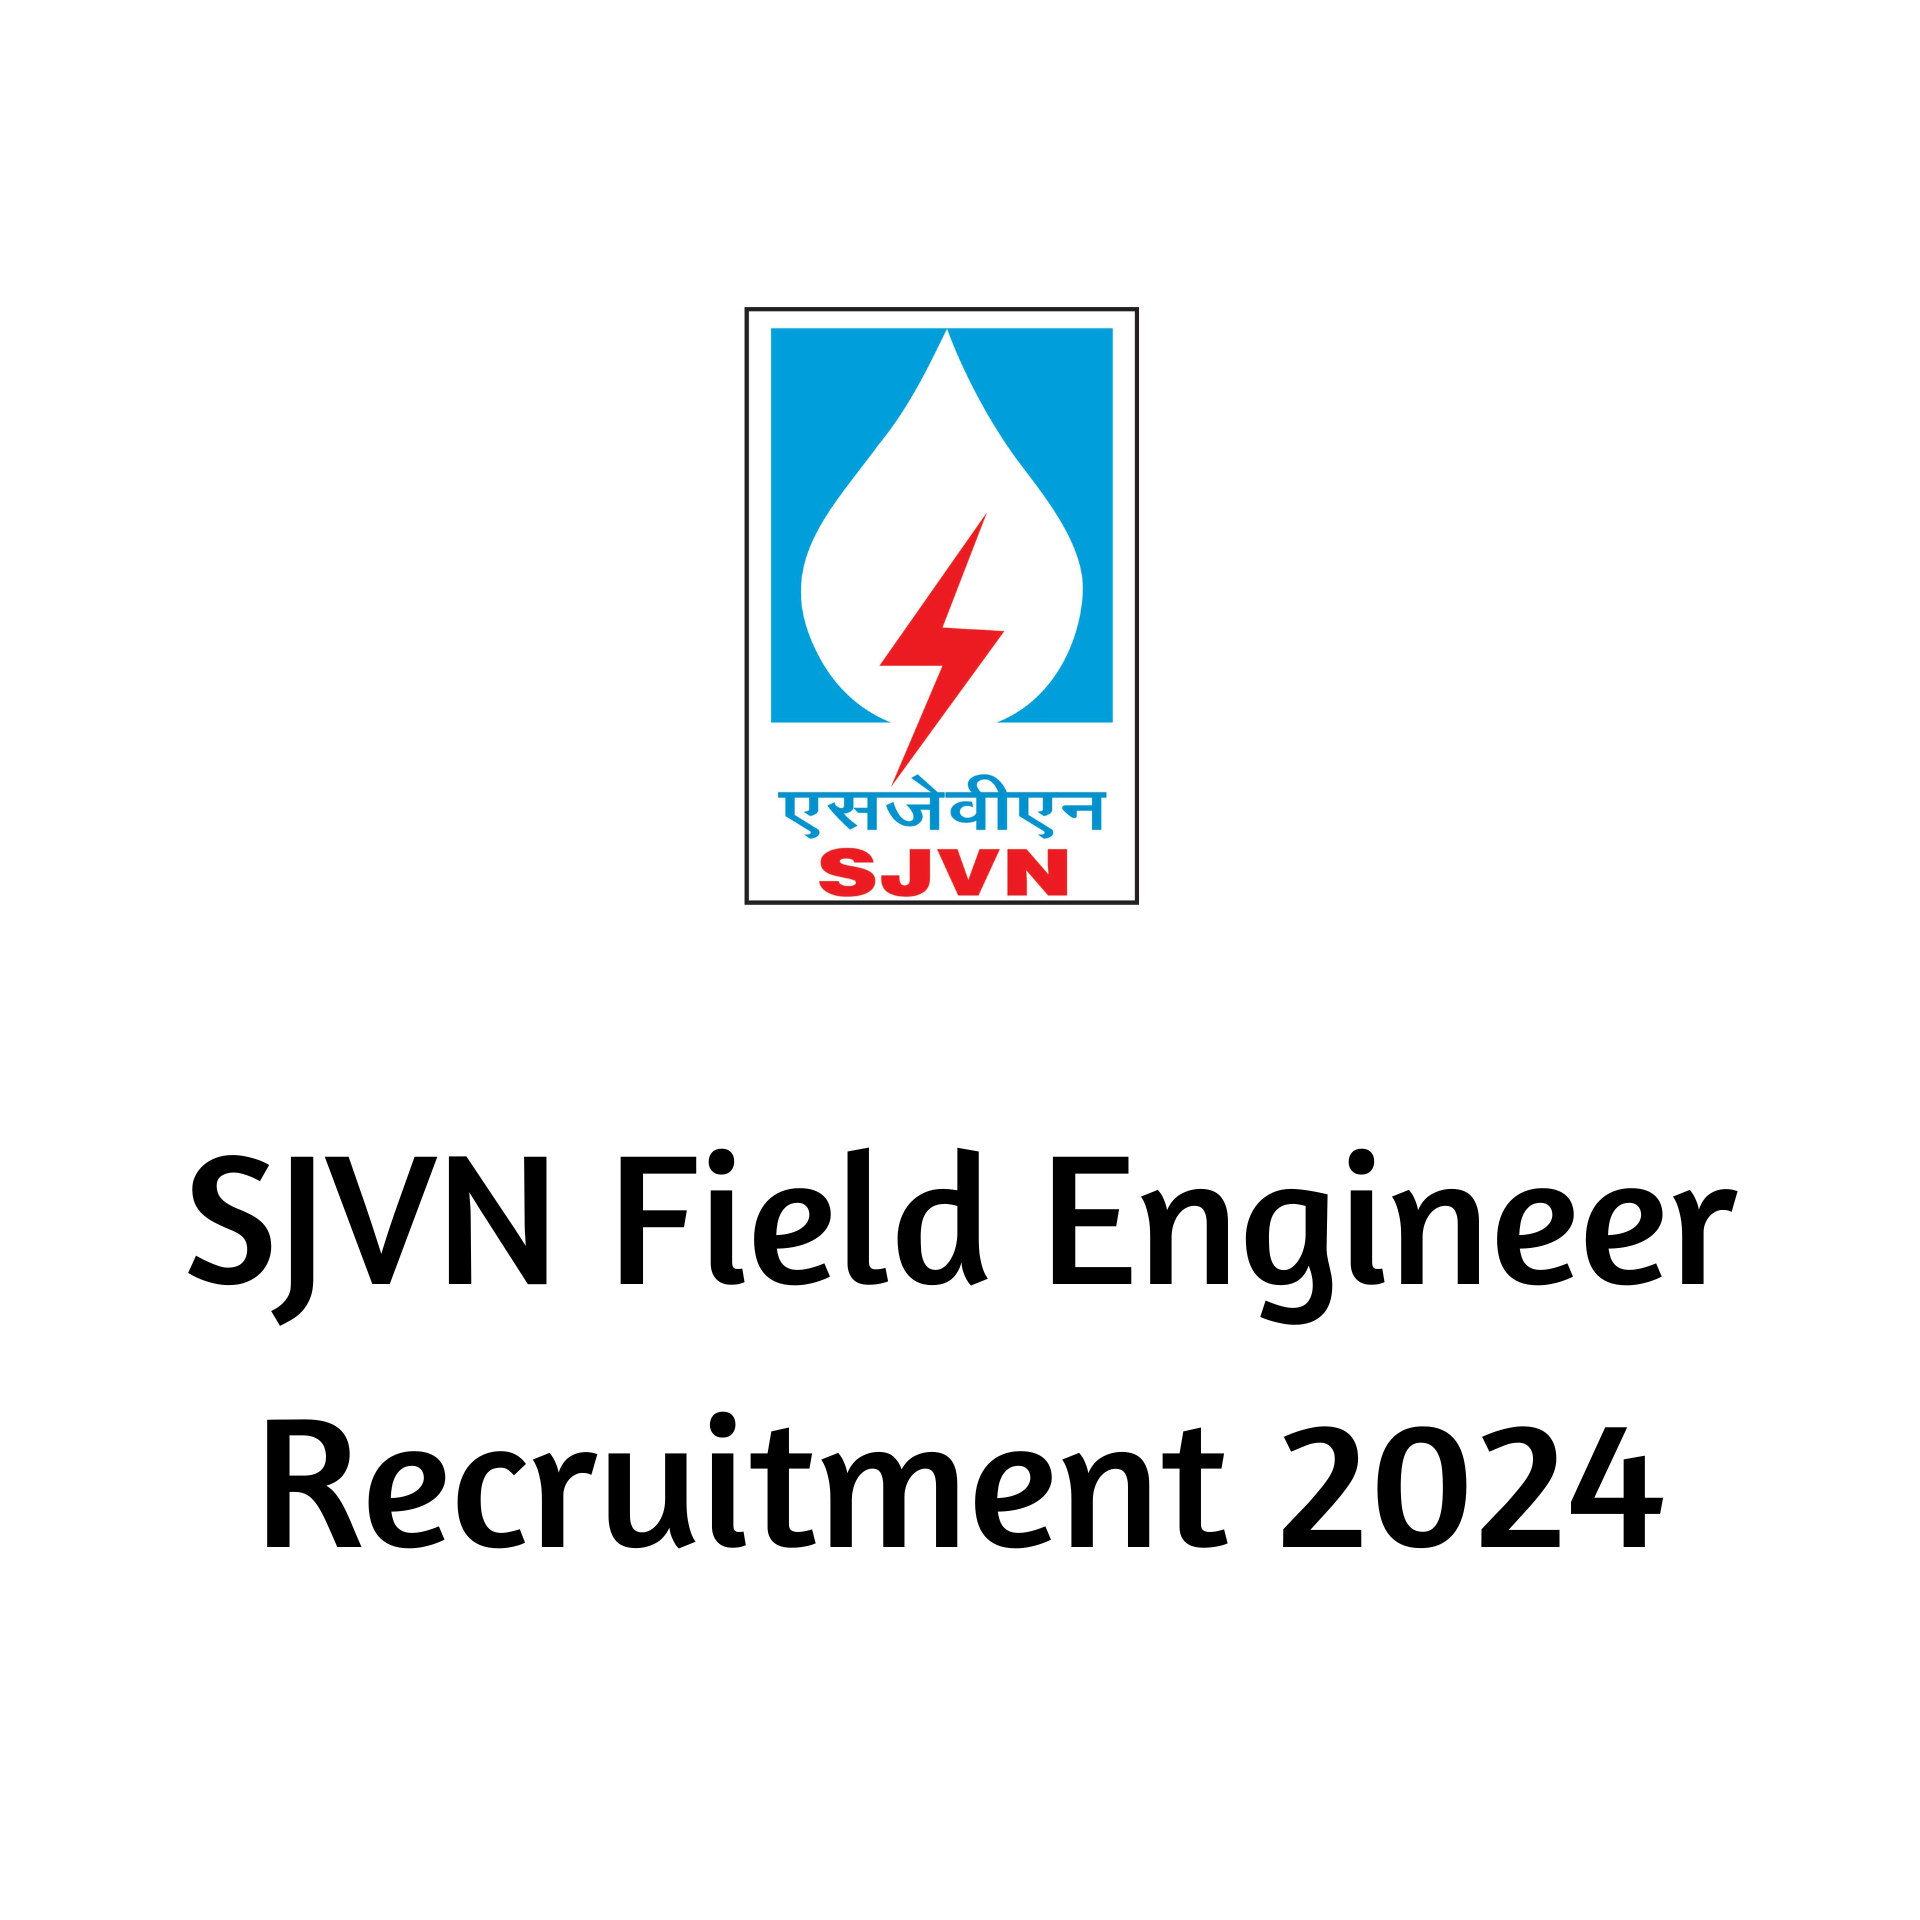 SJVN Field Engineer Recruitment 2024